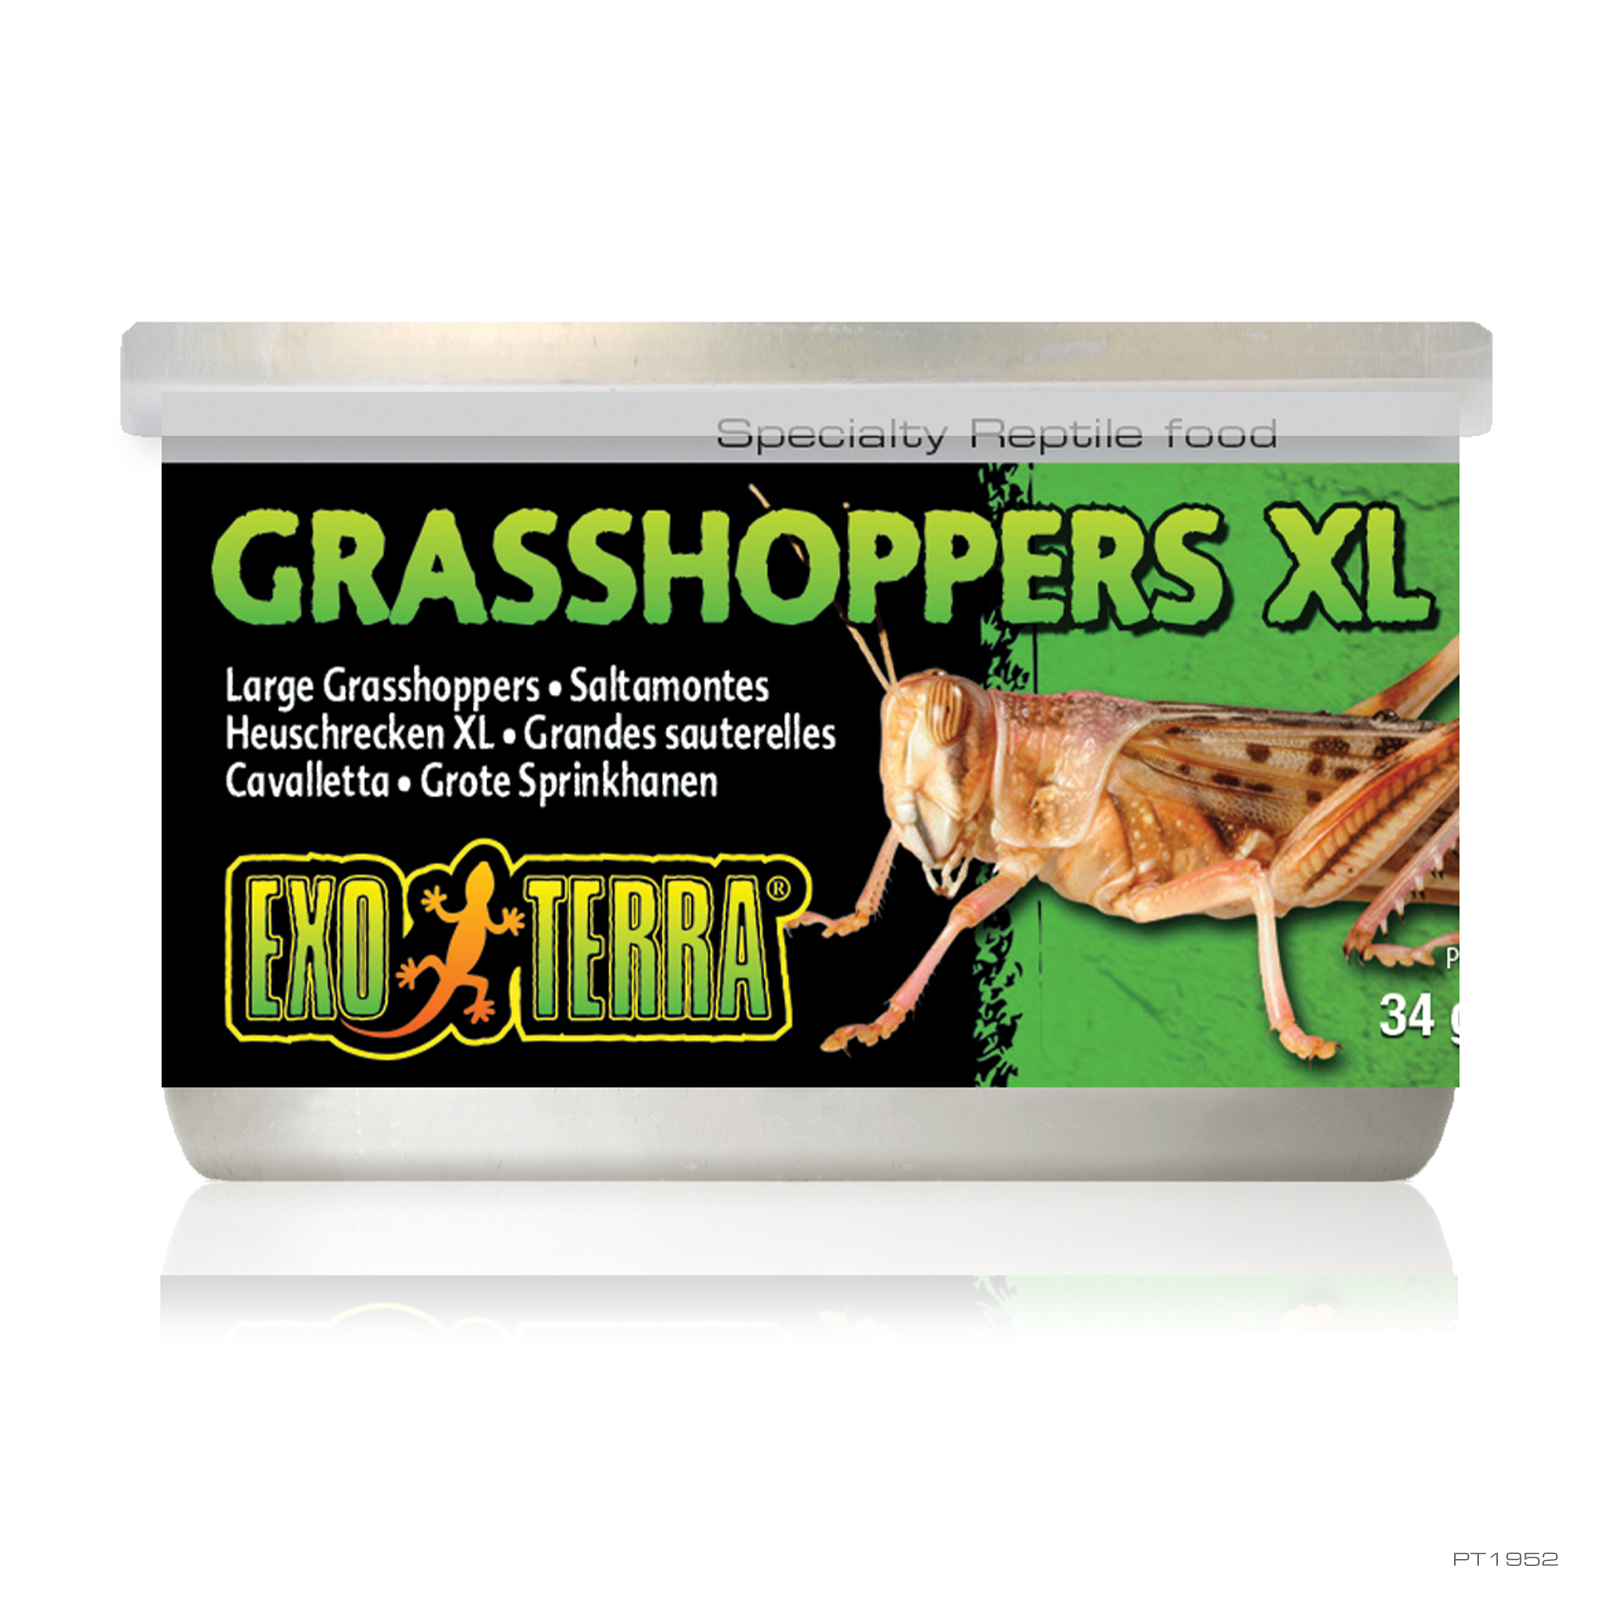 Grasshoppers XL 1.2 oz - 34g